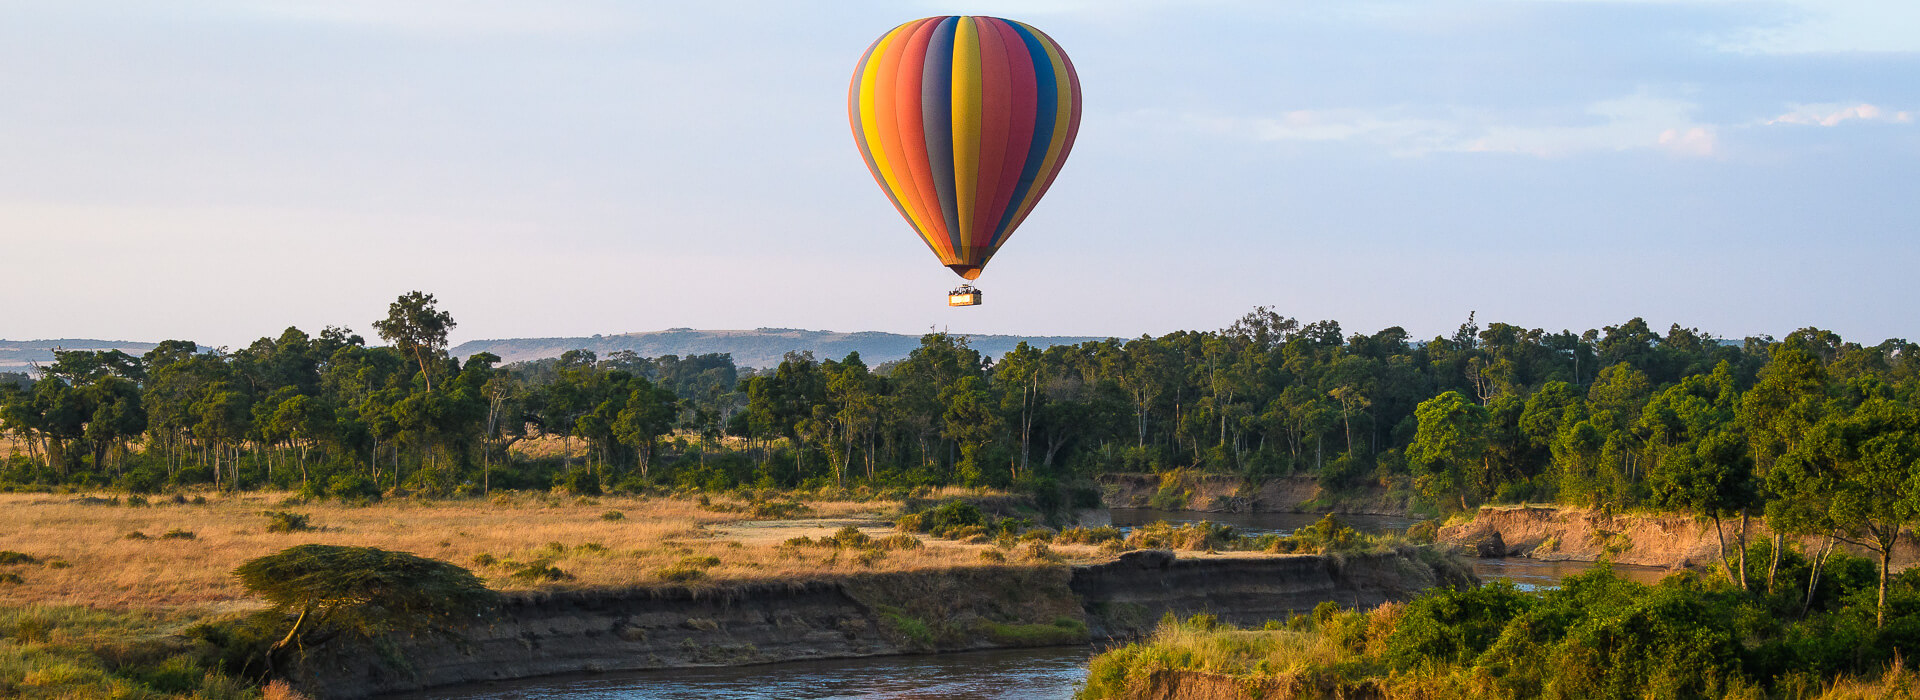 About Governor's Balloon Safaris